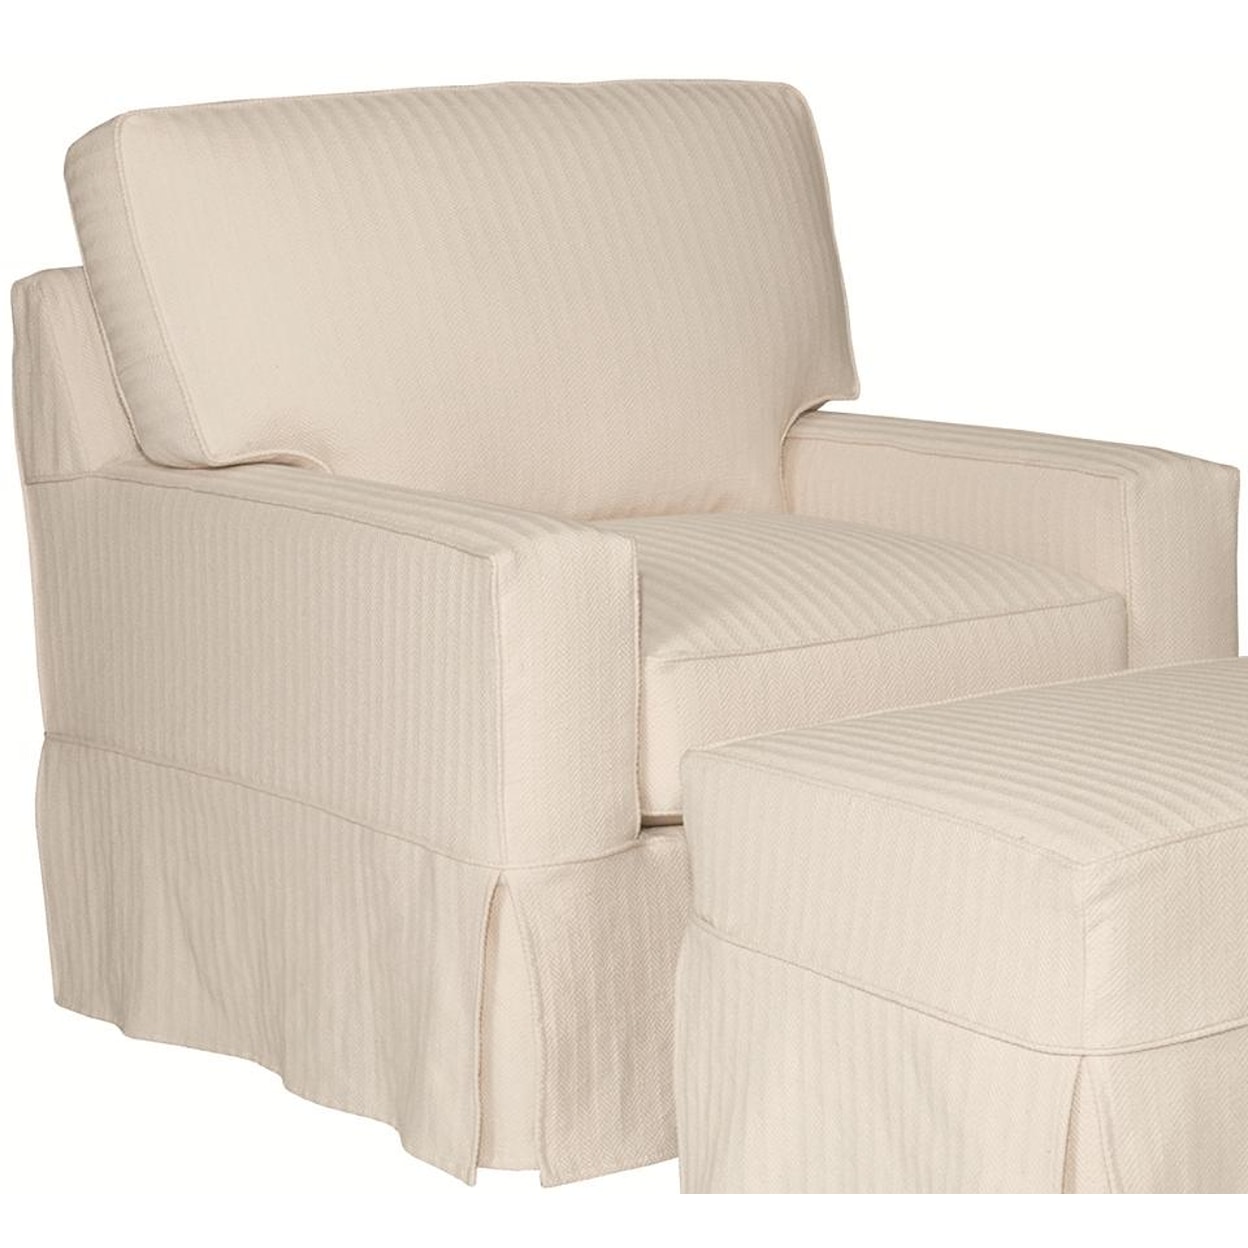 Kincaid Furniture Sarah Slipcover Chair